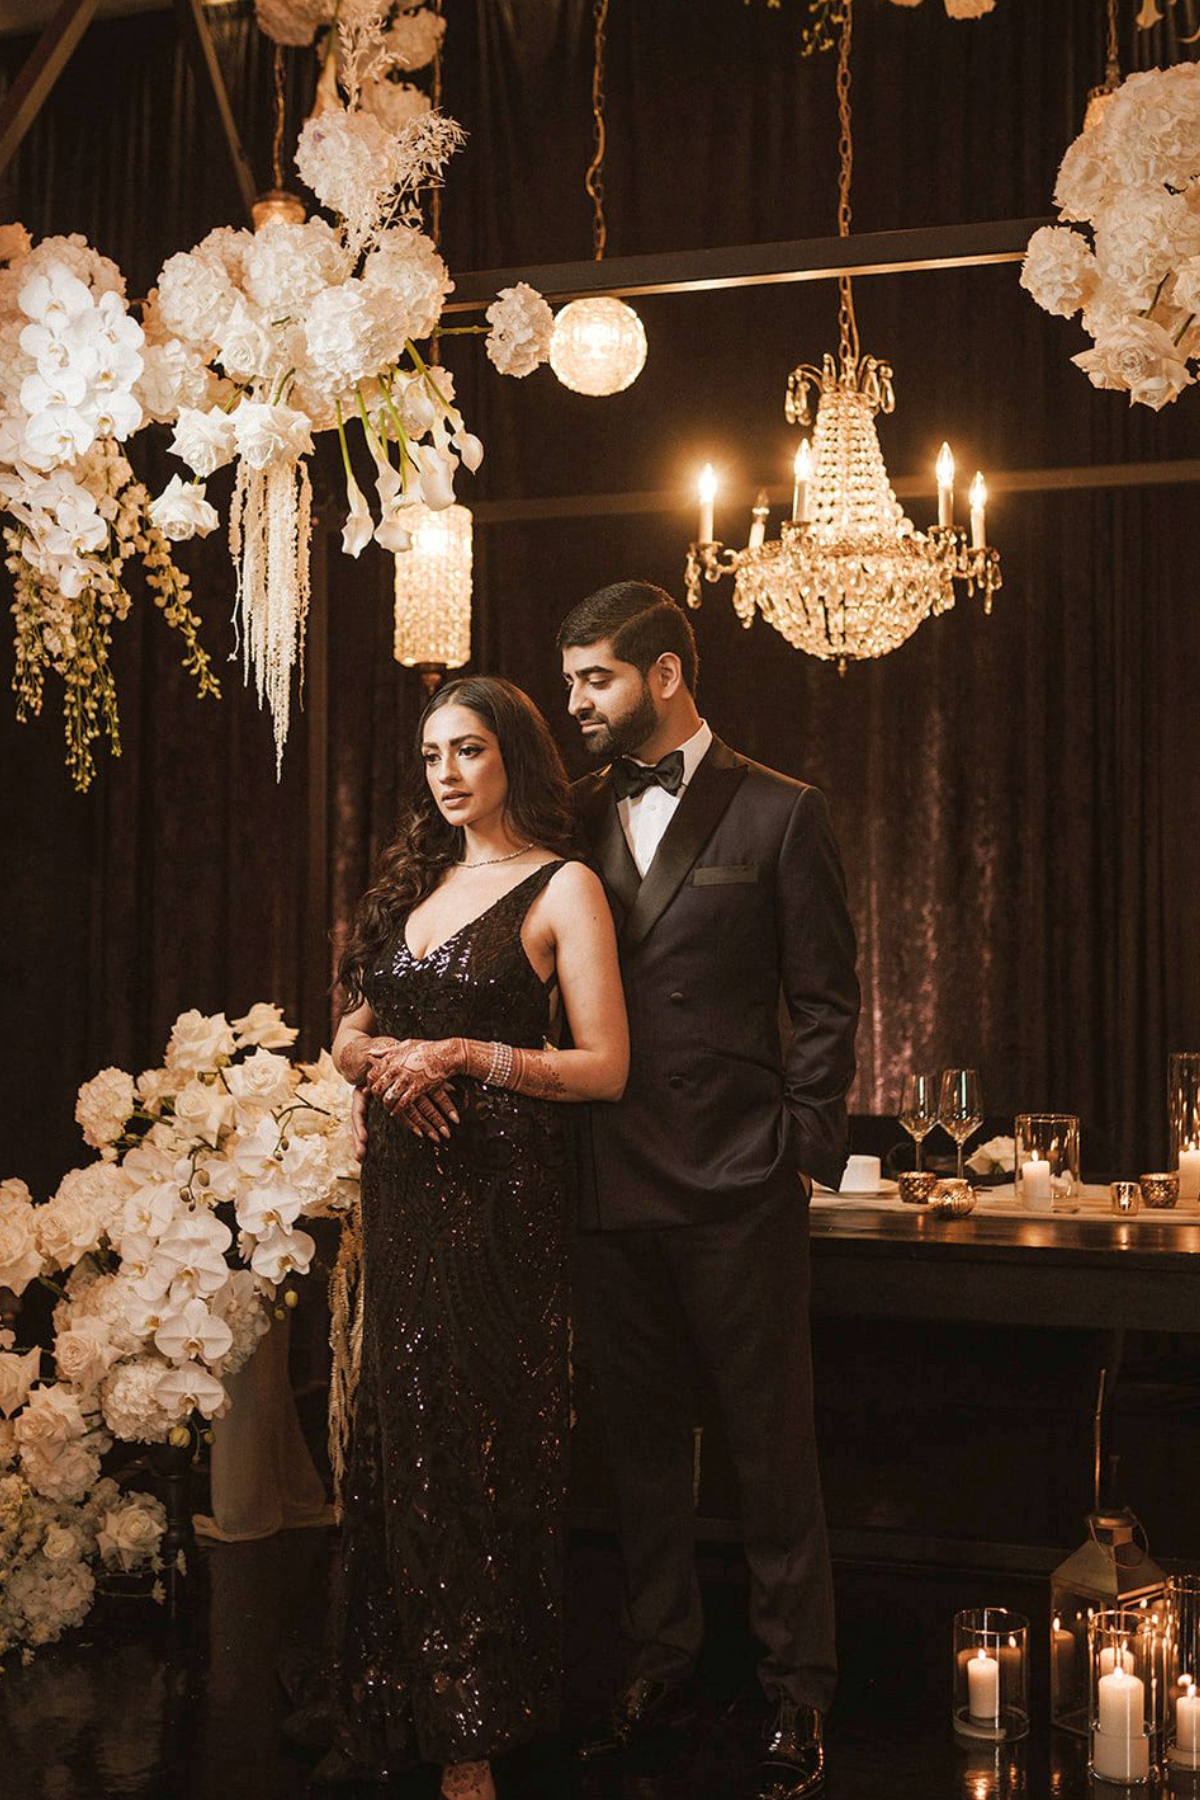 black-white-gold-wedding-reception-chandelier-bride-groom-flowers-candle